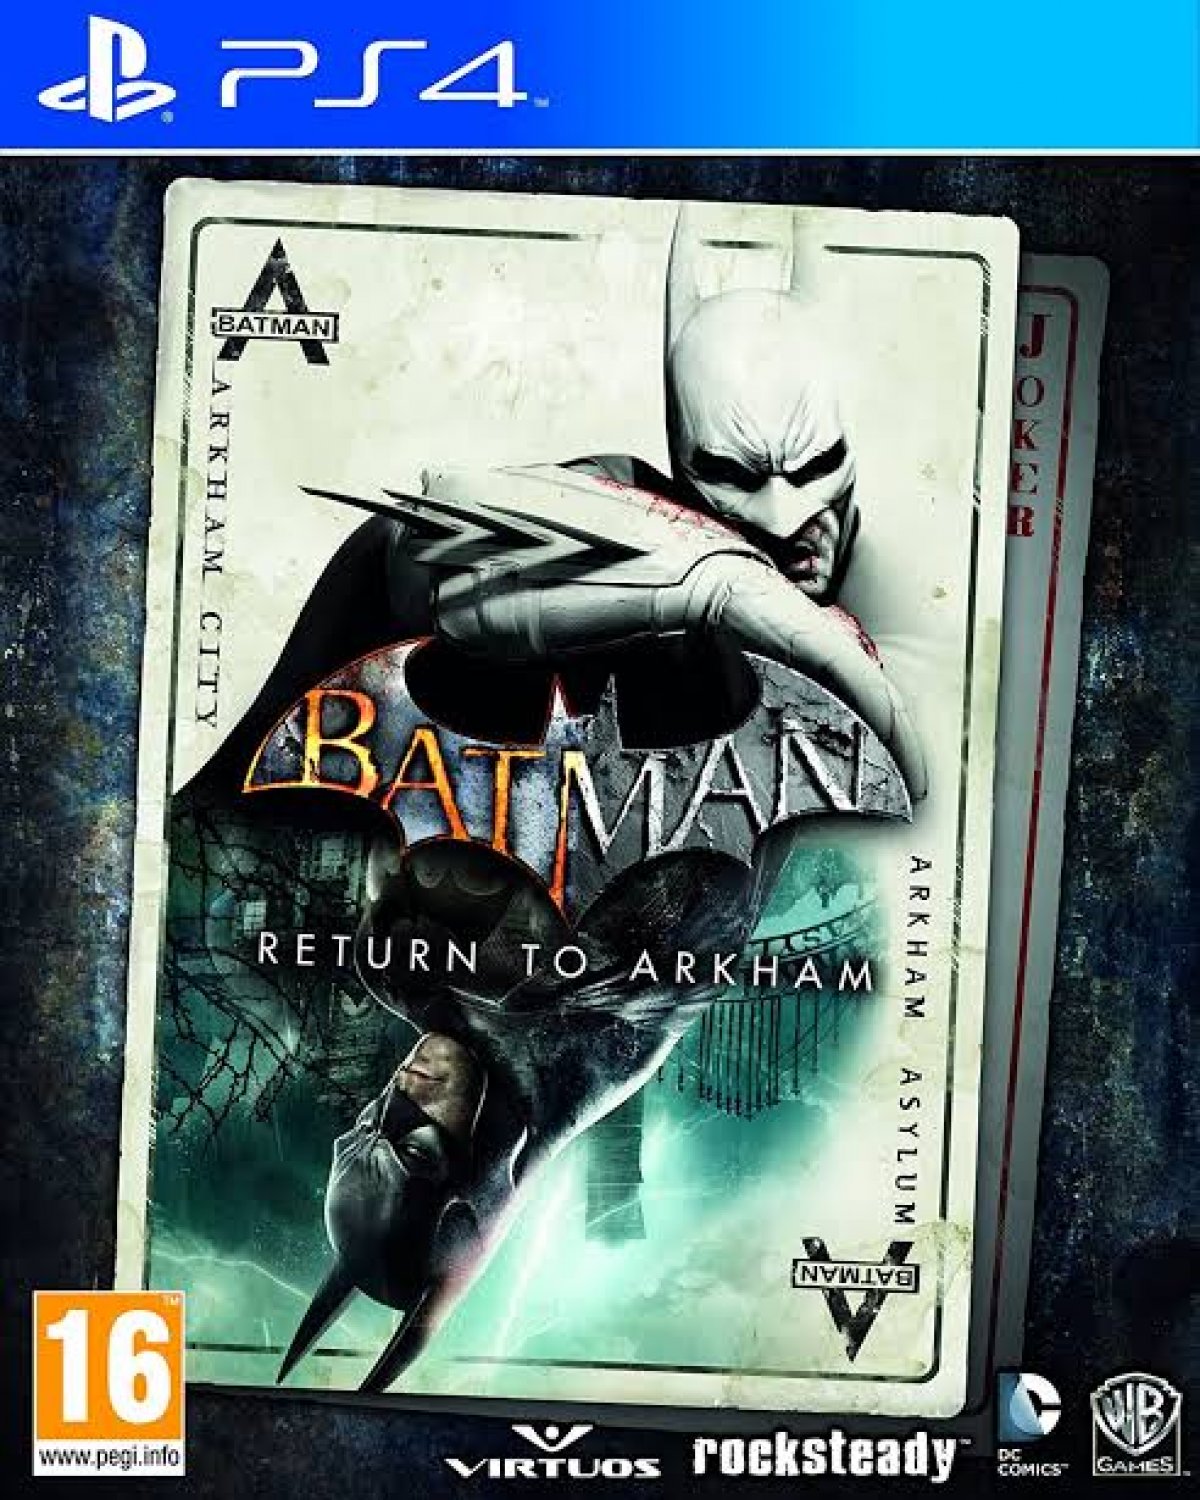 Batman returns to arkham